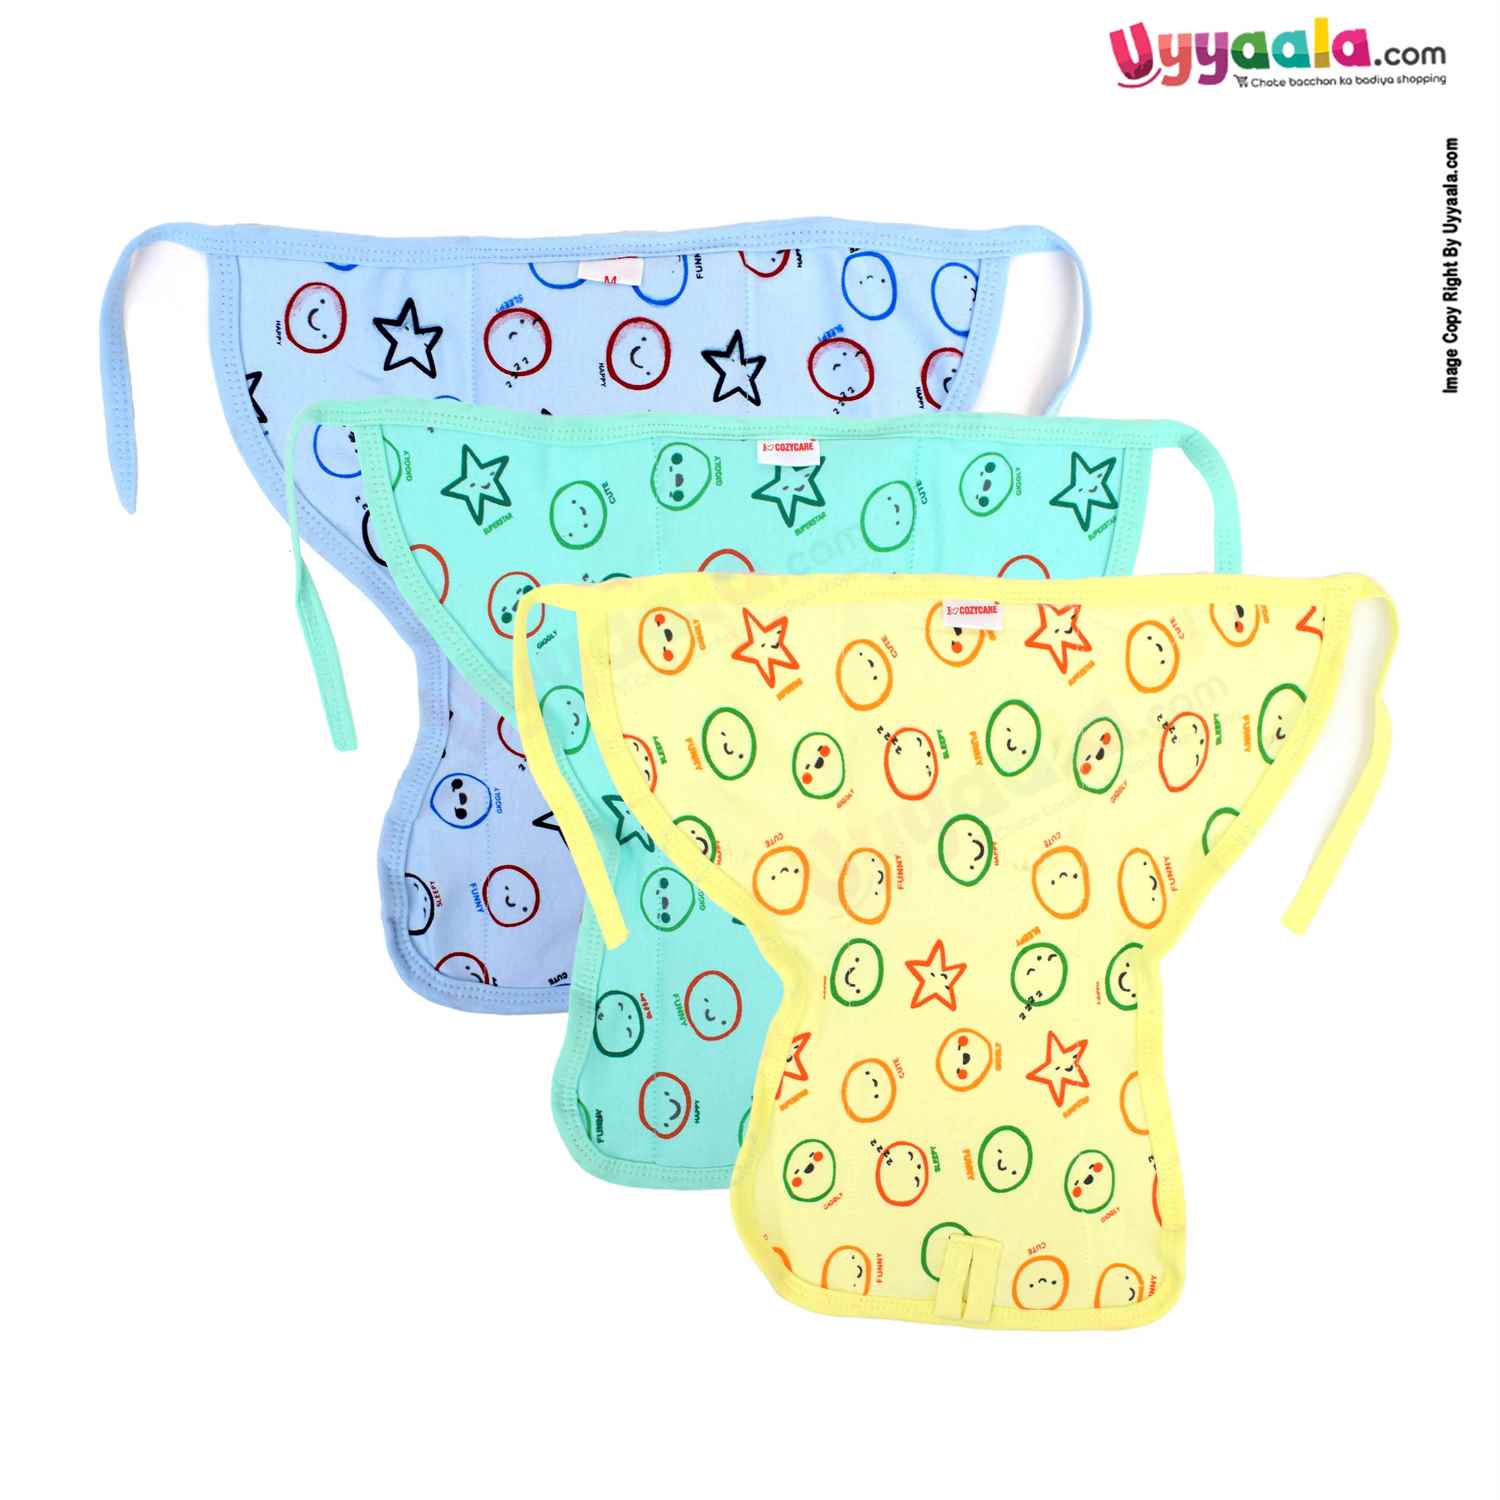 COZYCARE Washable Diapers Hosiery Tying Mode Emoji Print Blue, Green & Yellow 3P Set (M)